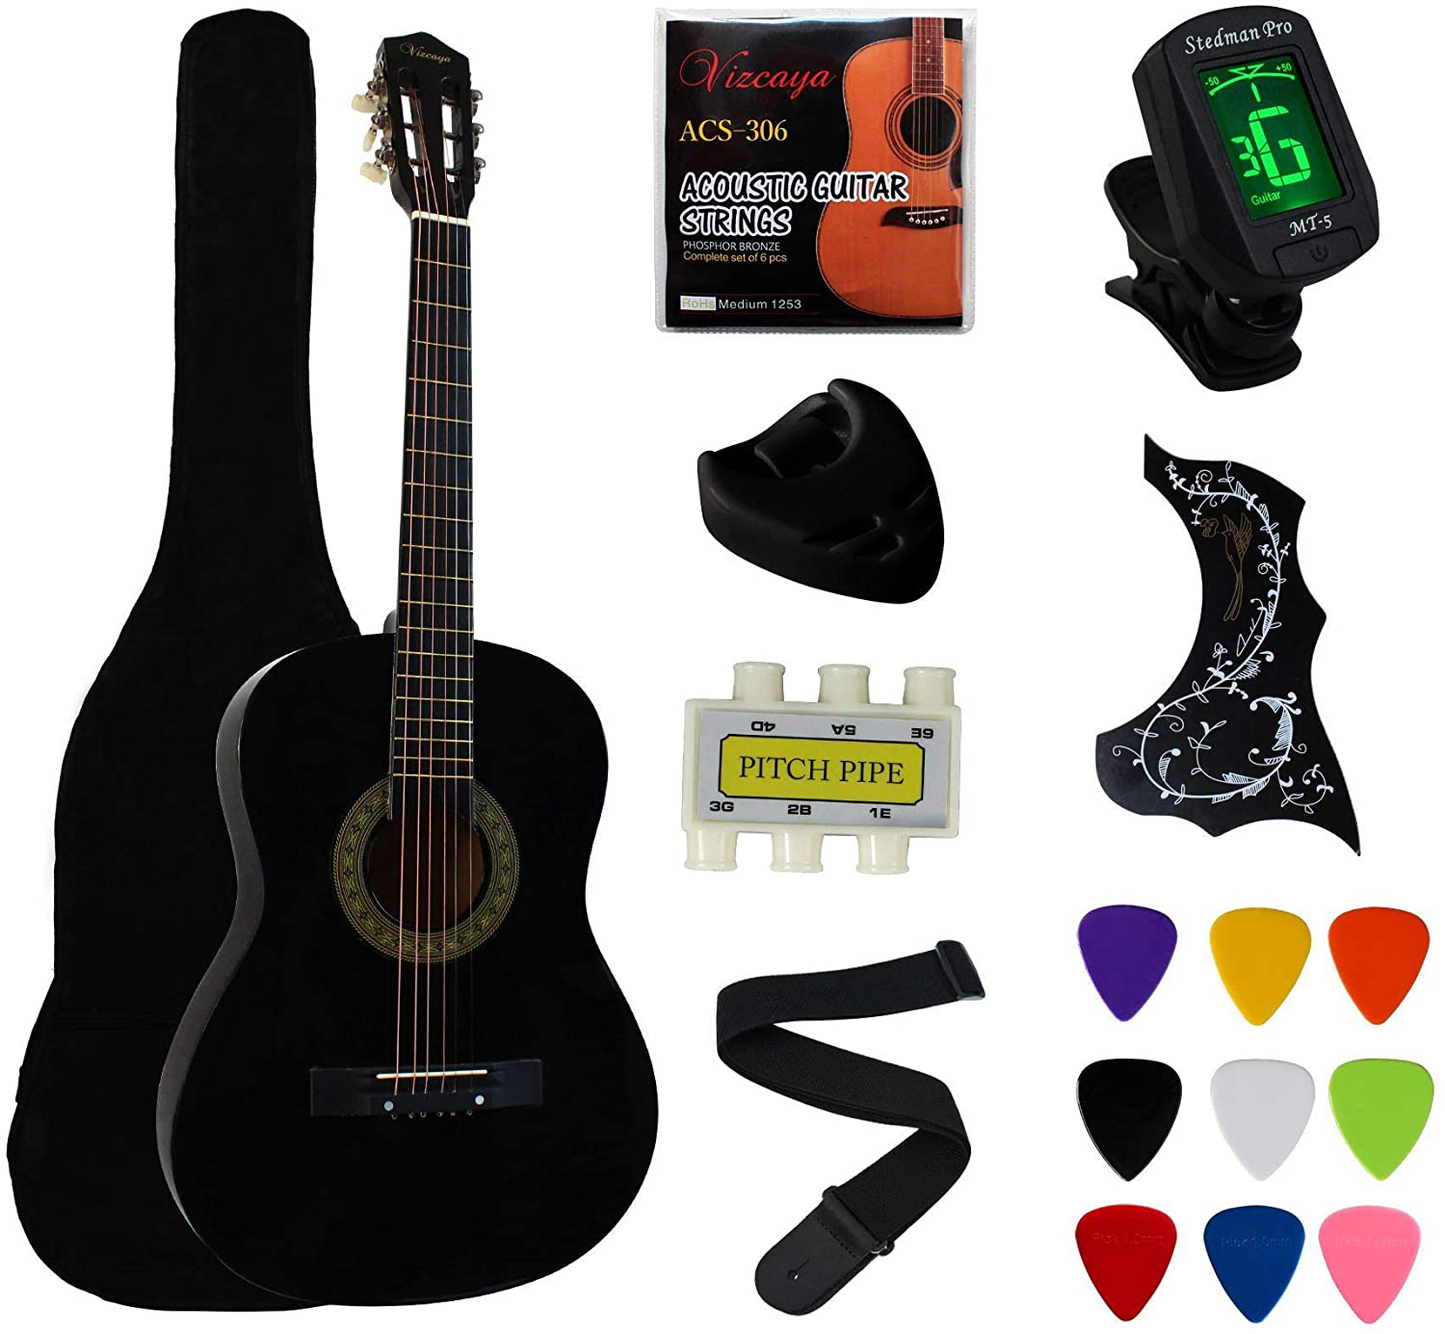 YMC 38" Black Beginner Acoustic Guitar Starter Package Student Guitar with Gig Bag,Strap, 3 thickness 9 picks,2 Pickguards,Pick Holder, Extra Strings, Electronic Tuner -Black